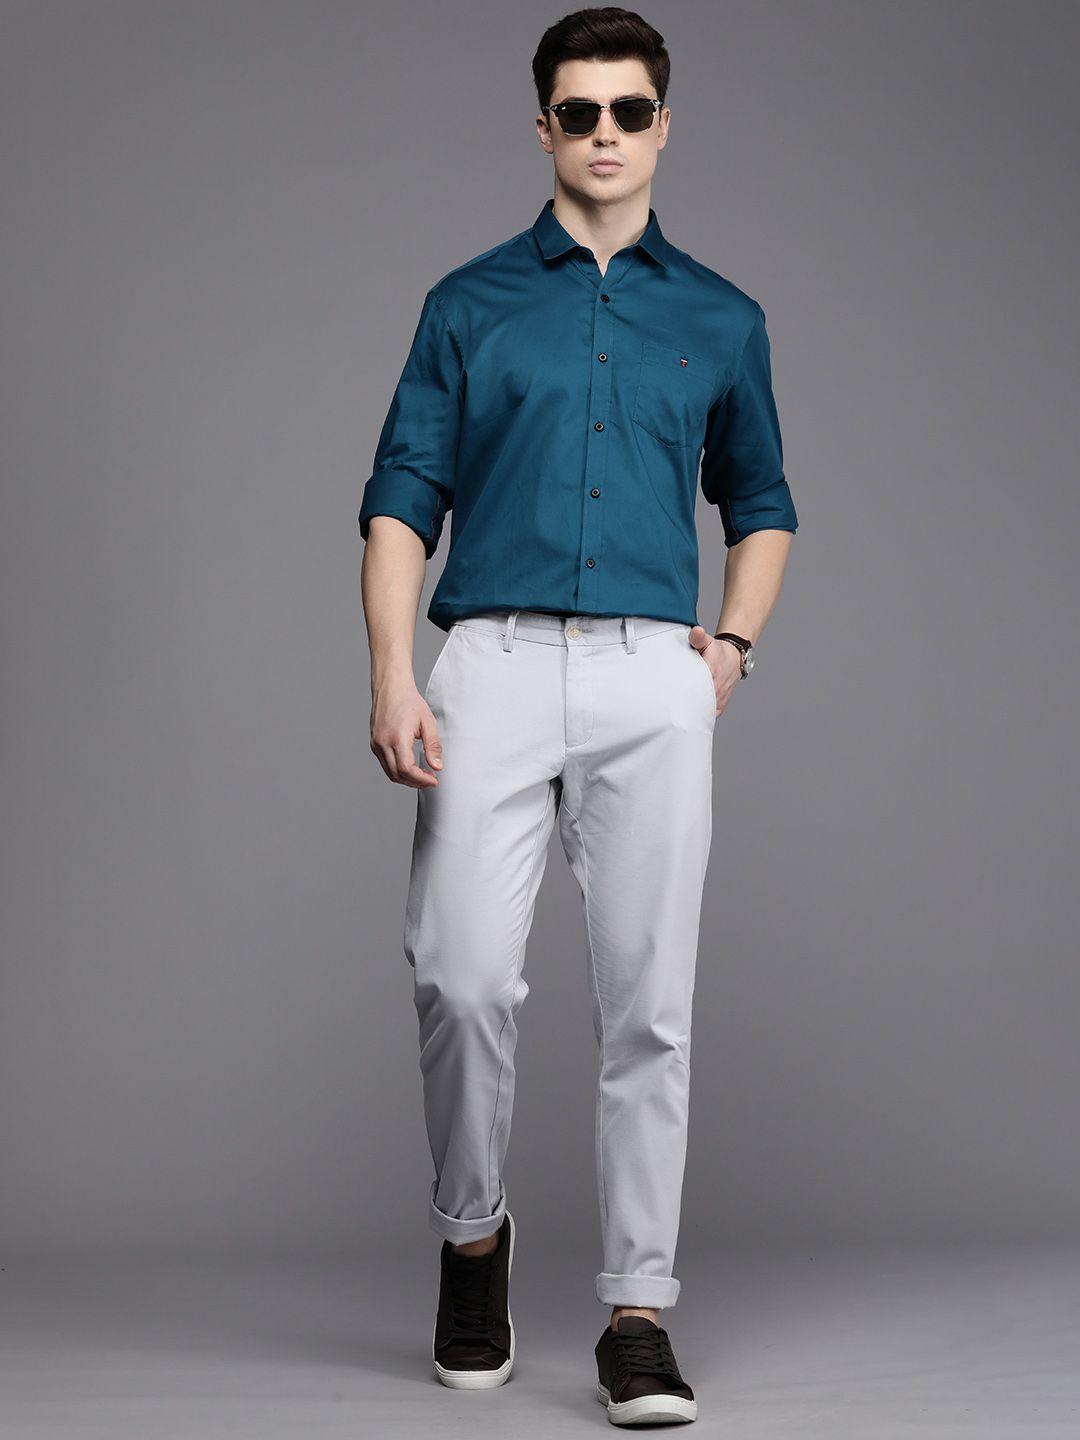 louis philippe jeans men teal slim fit opaque pure cotton casual shirt